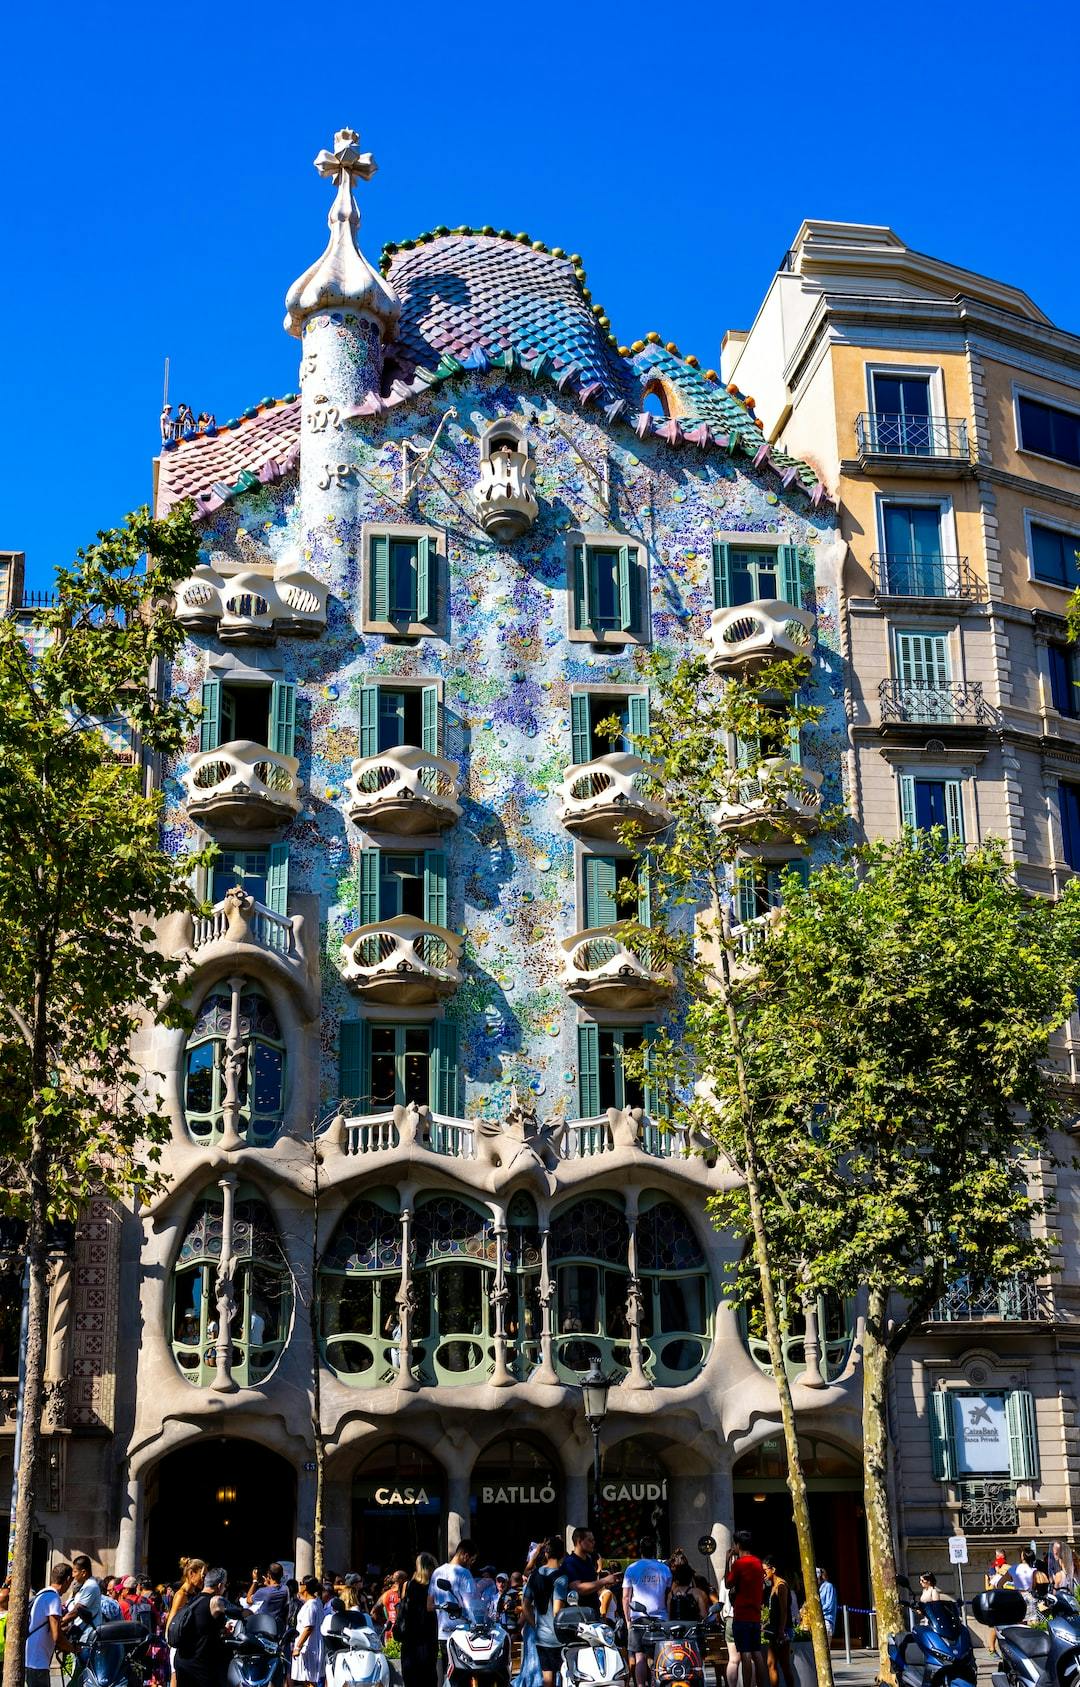 A Spanish Gaudi architecture illustration